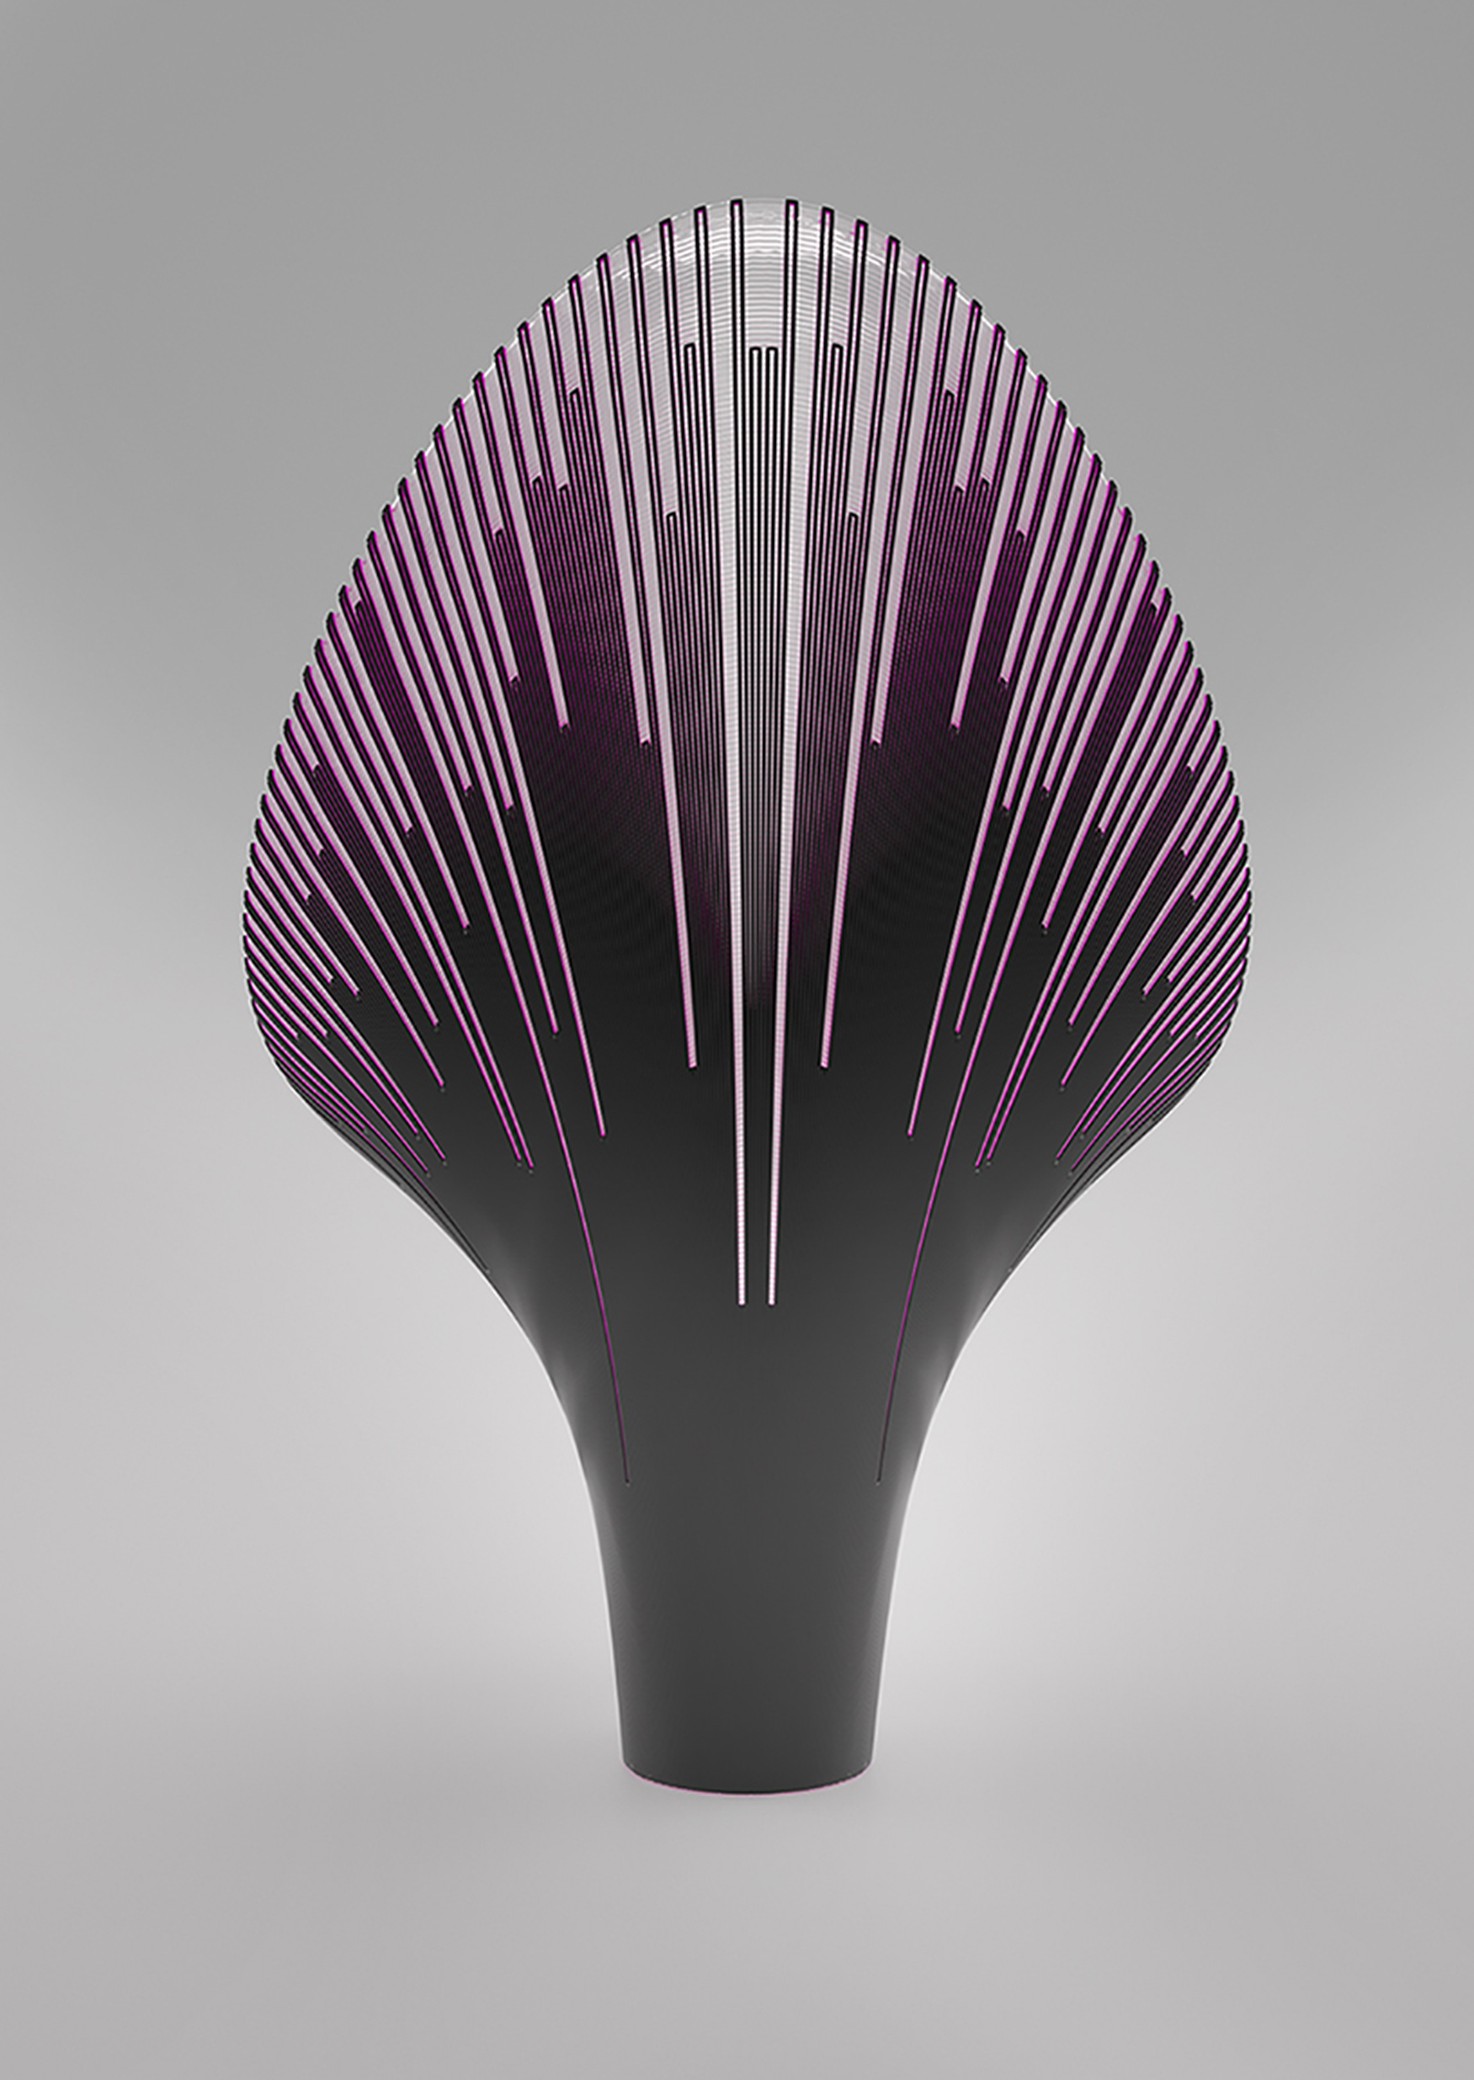 3D-Printed Chairs-Zaha Hadid-Visual Atelier 8-6.jpg